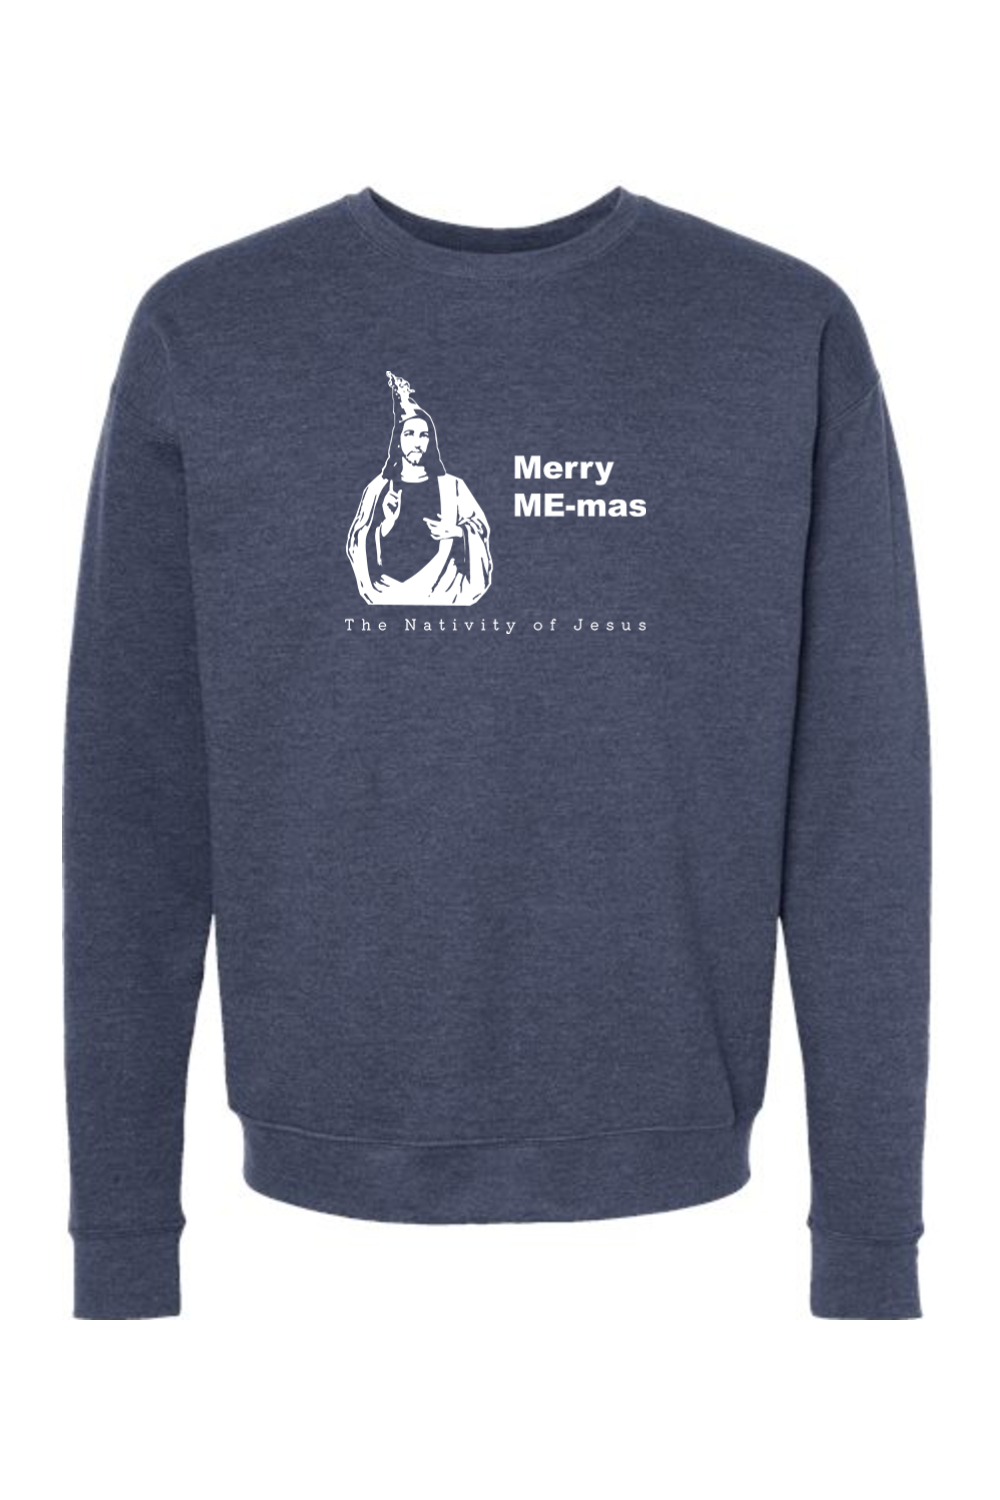 Merry ME-mas - The Nativity of Jesus Crewneck Sweatshirt